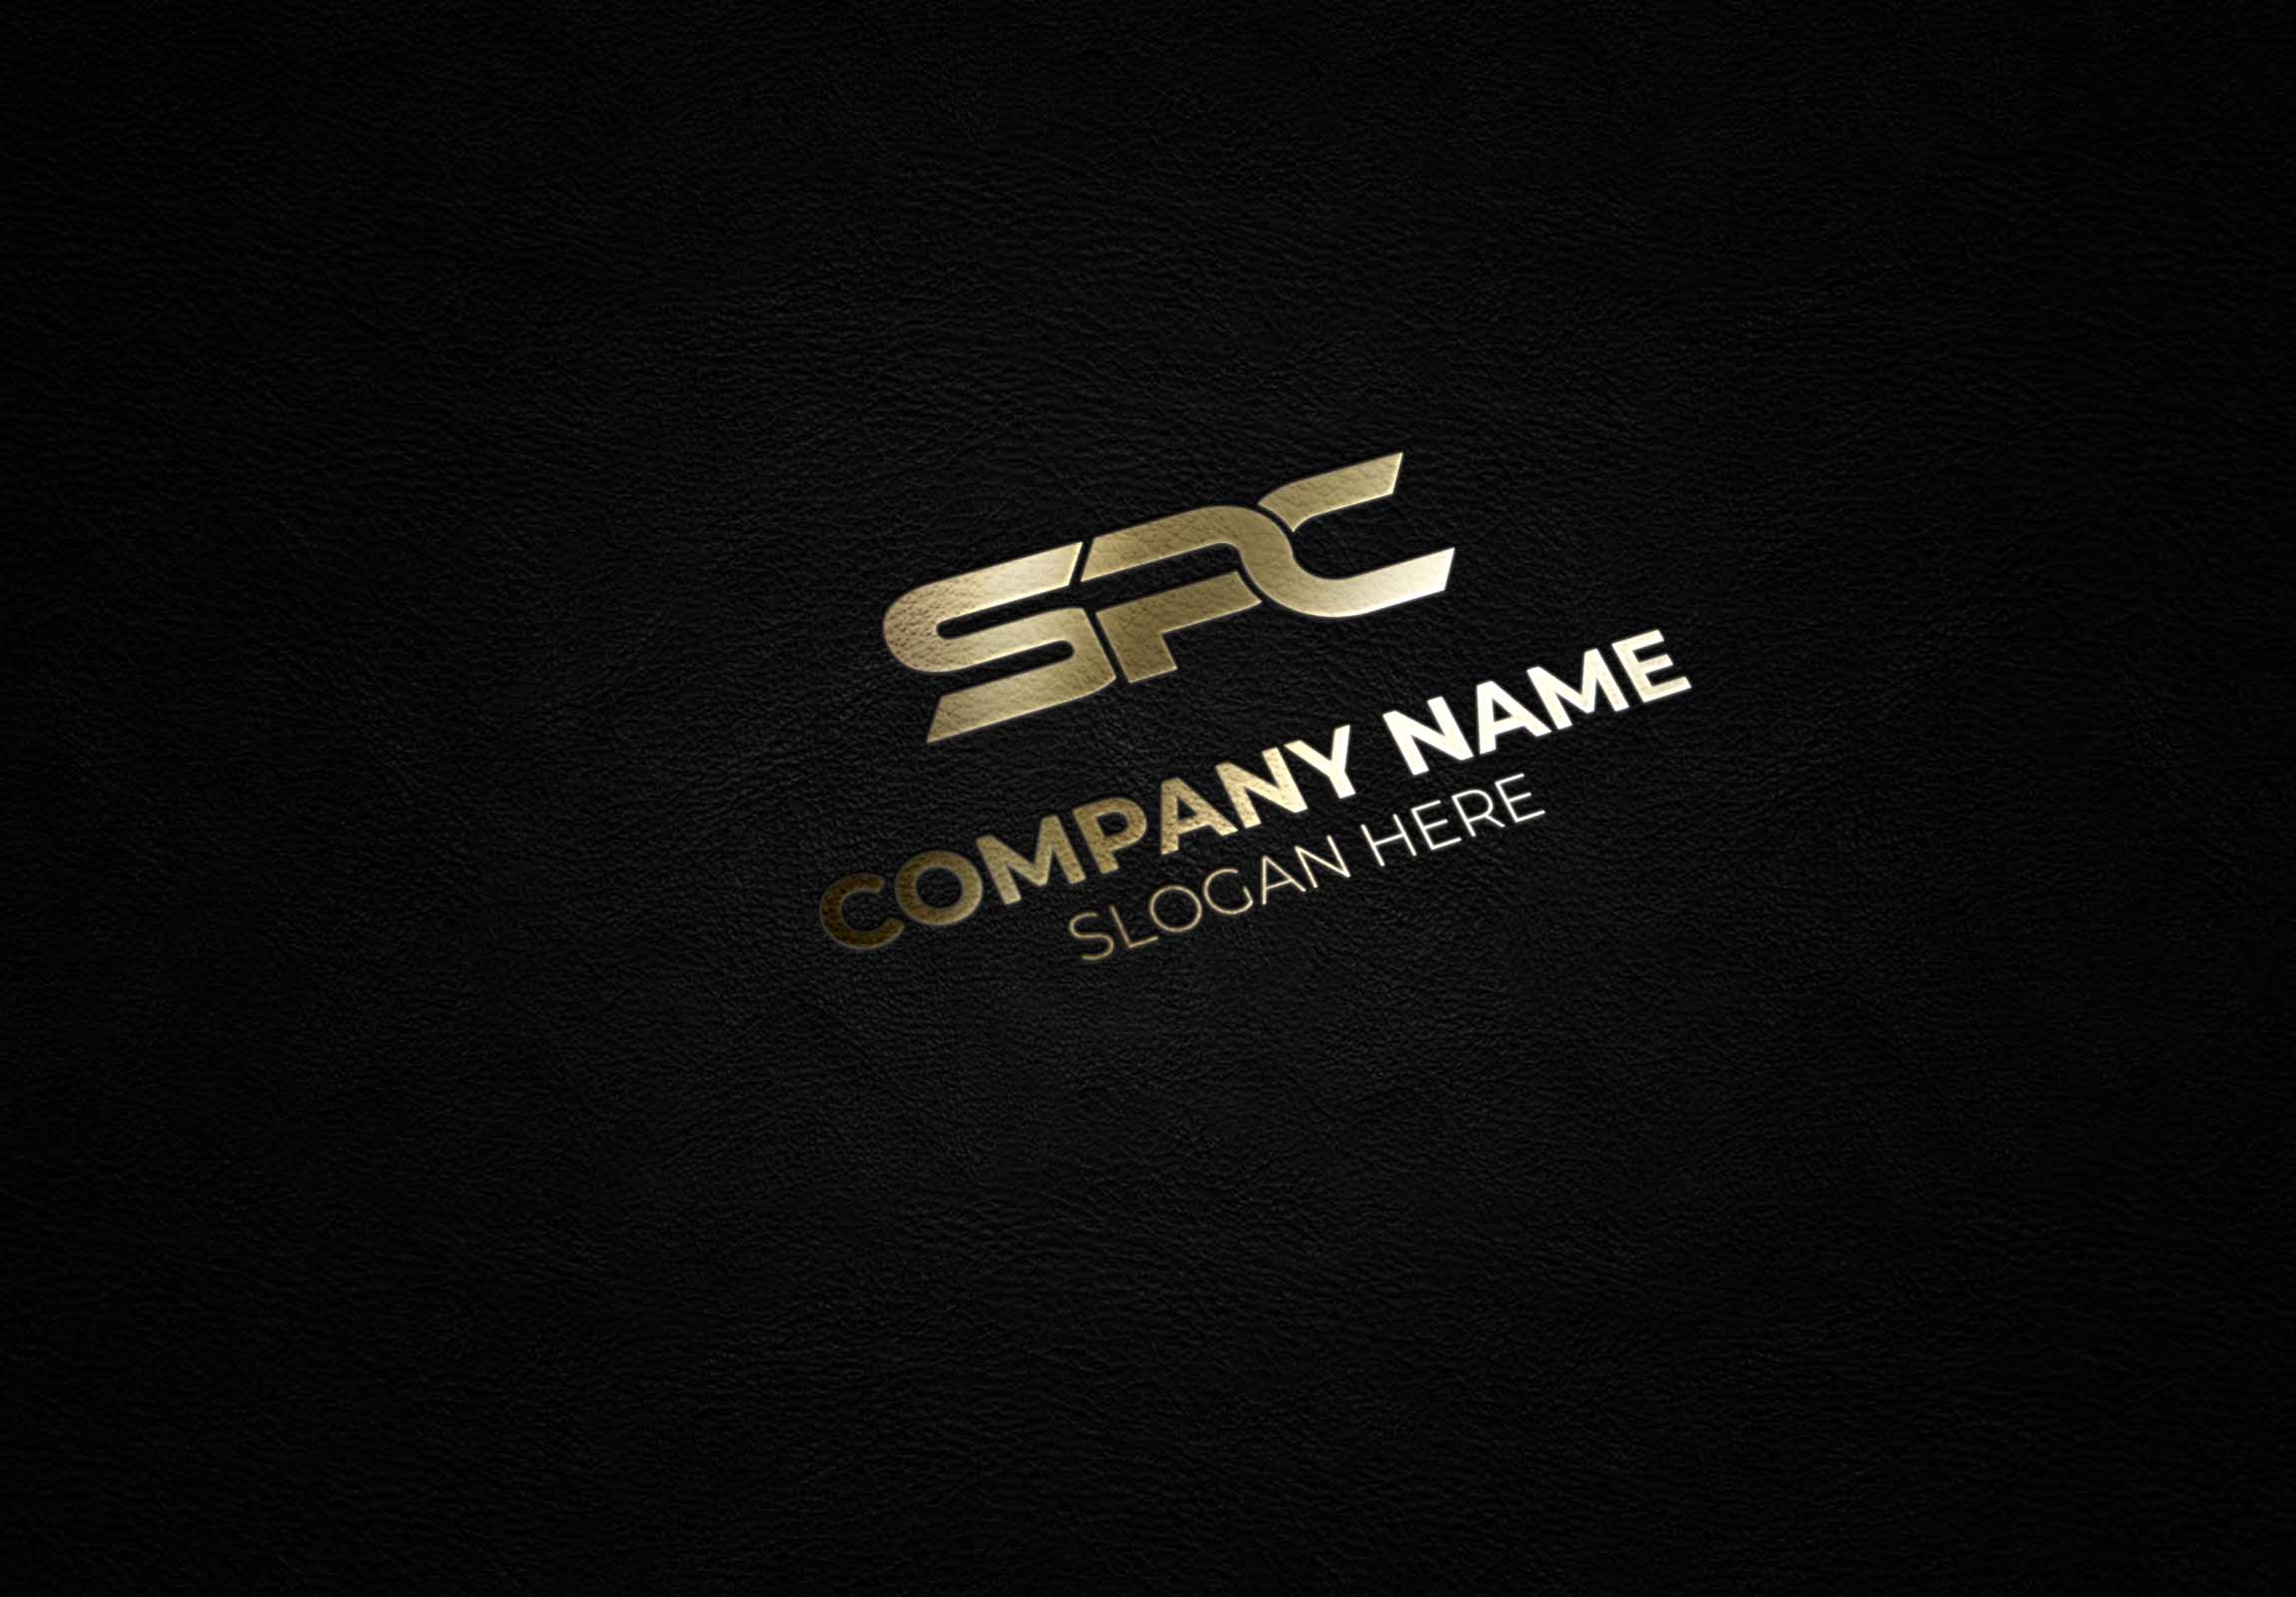 SPC logo design in illustrator cc. - YouTube